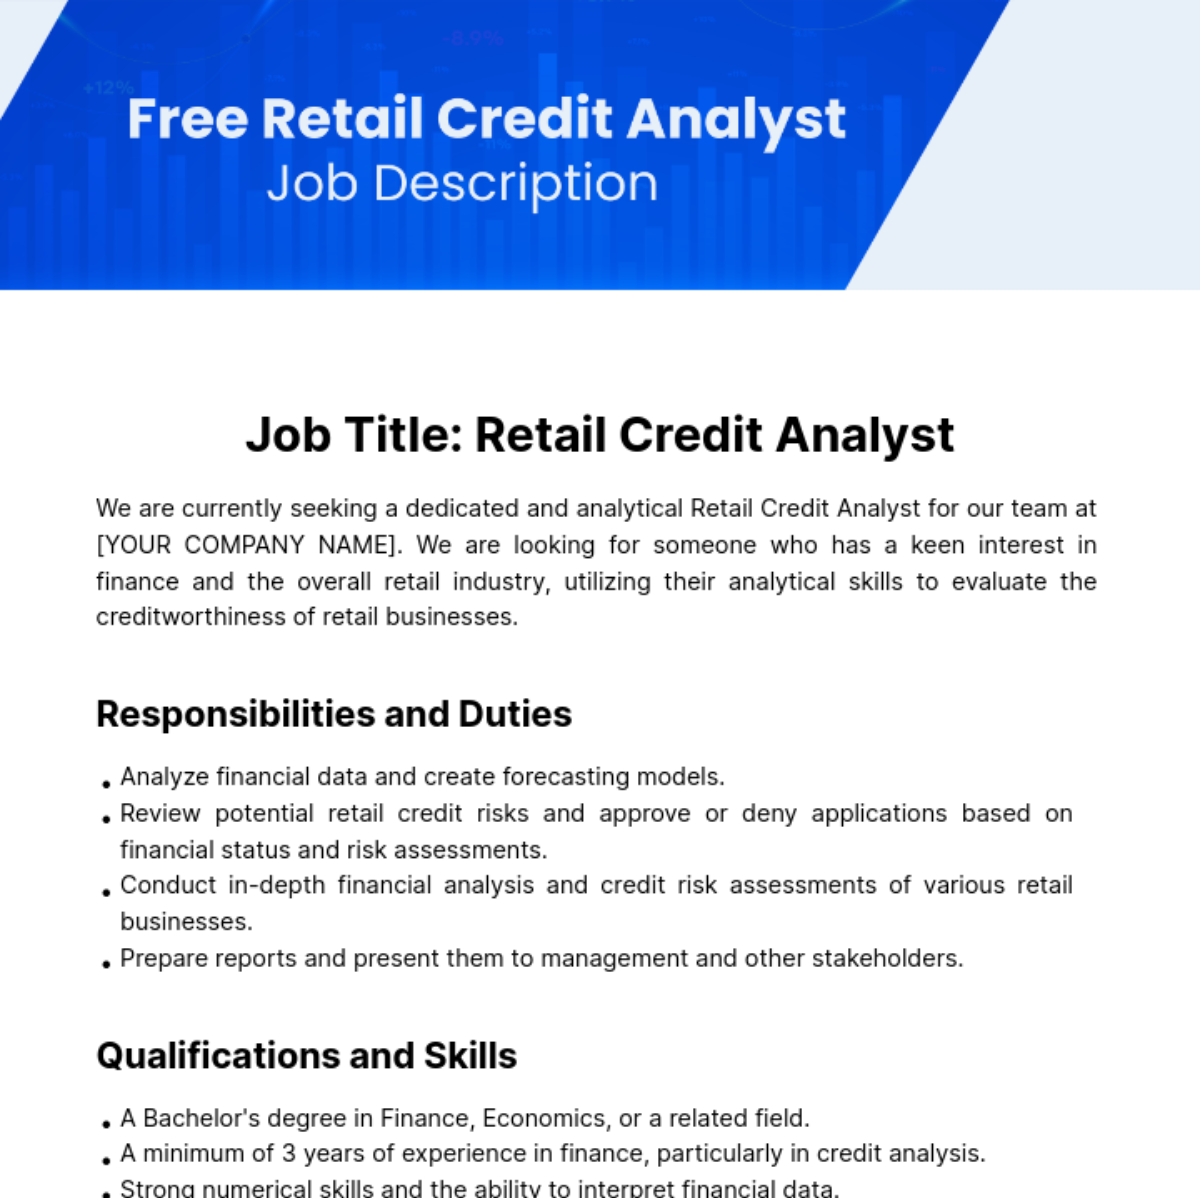 Free Retail Credit Analyst Job Description Template